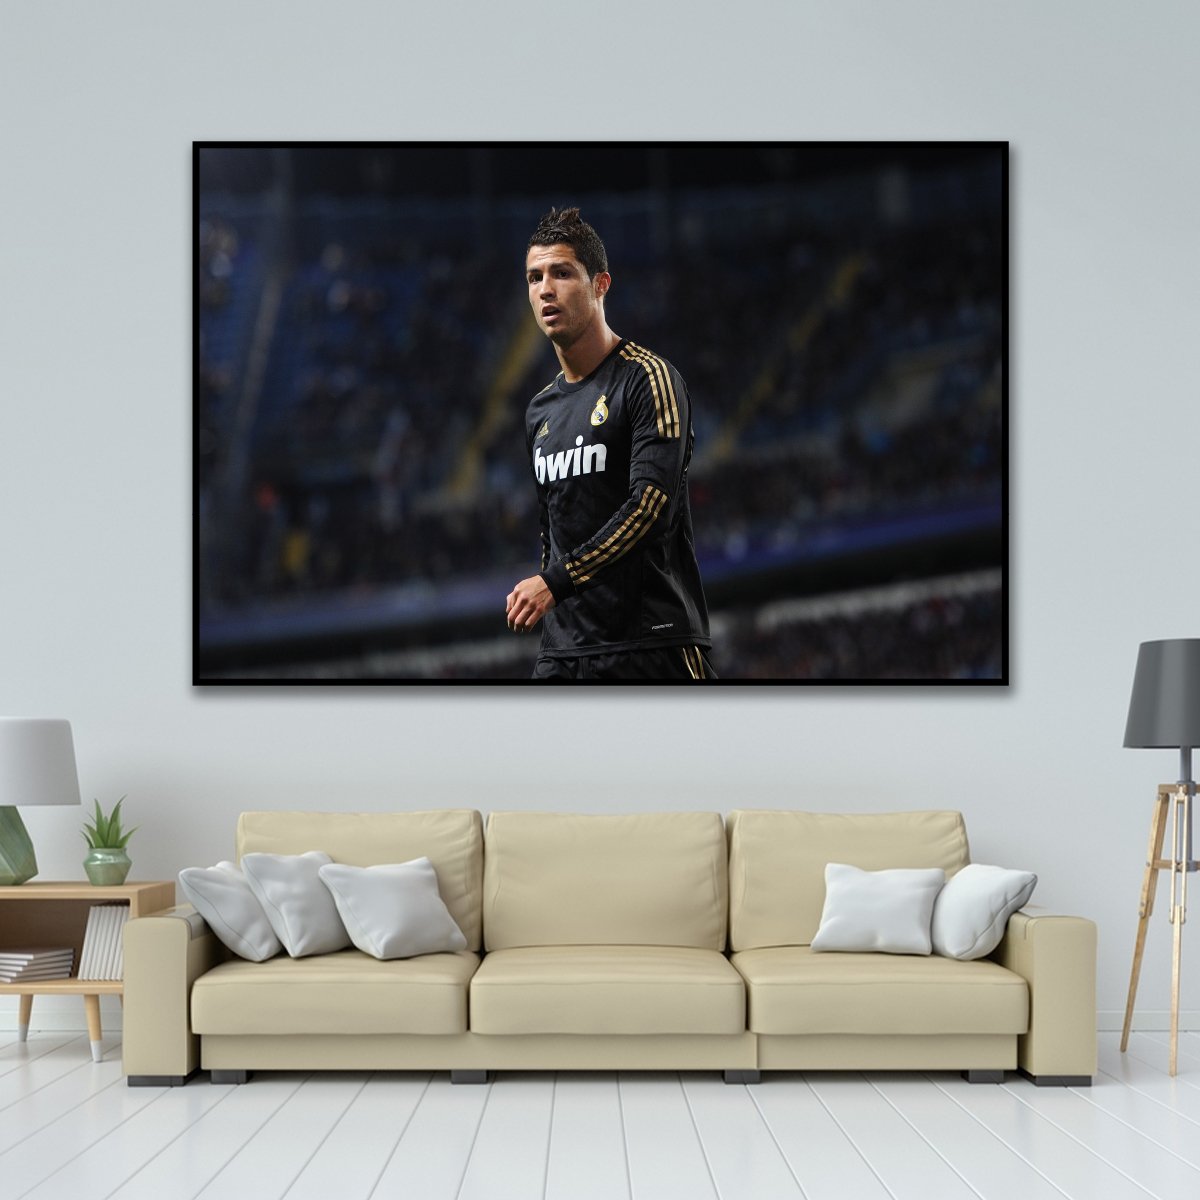 Tranh treo tường cầu thủ Cristiano Ronaldo 7